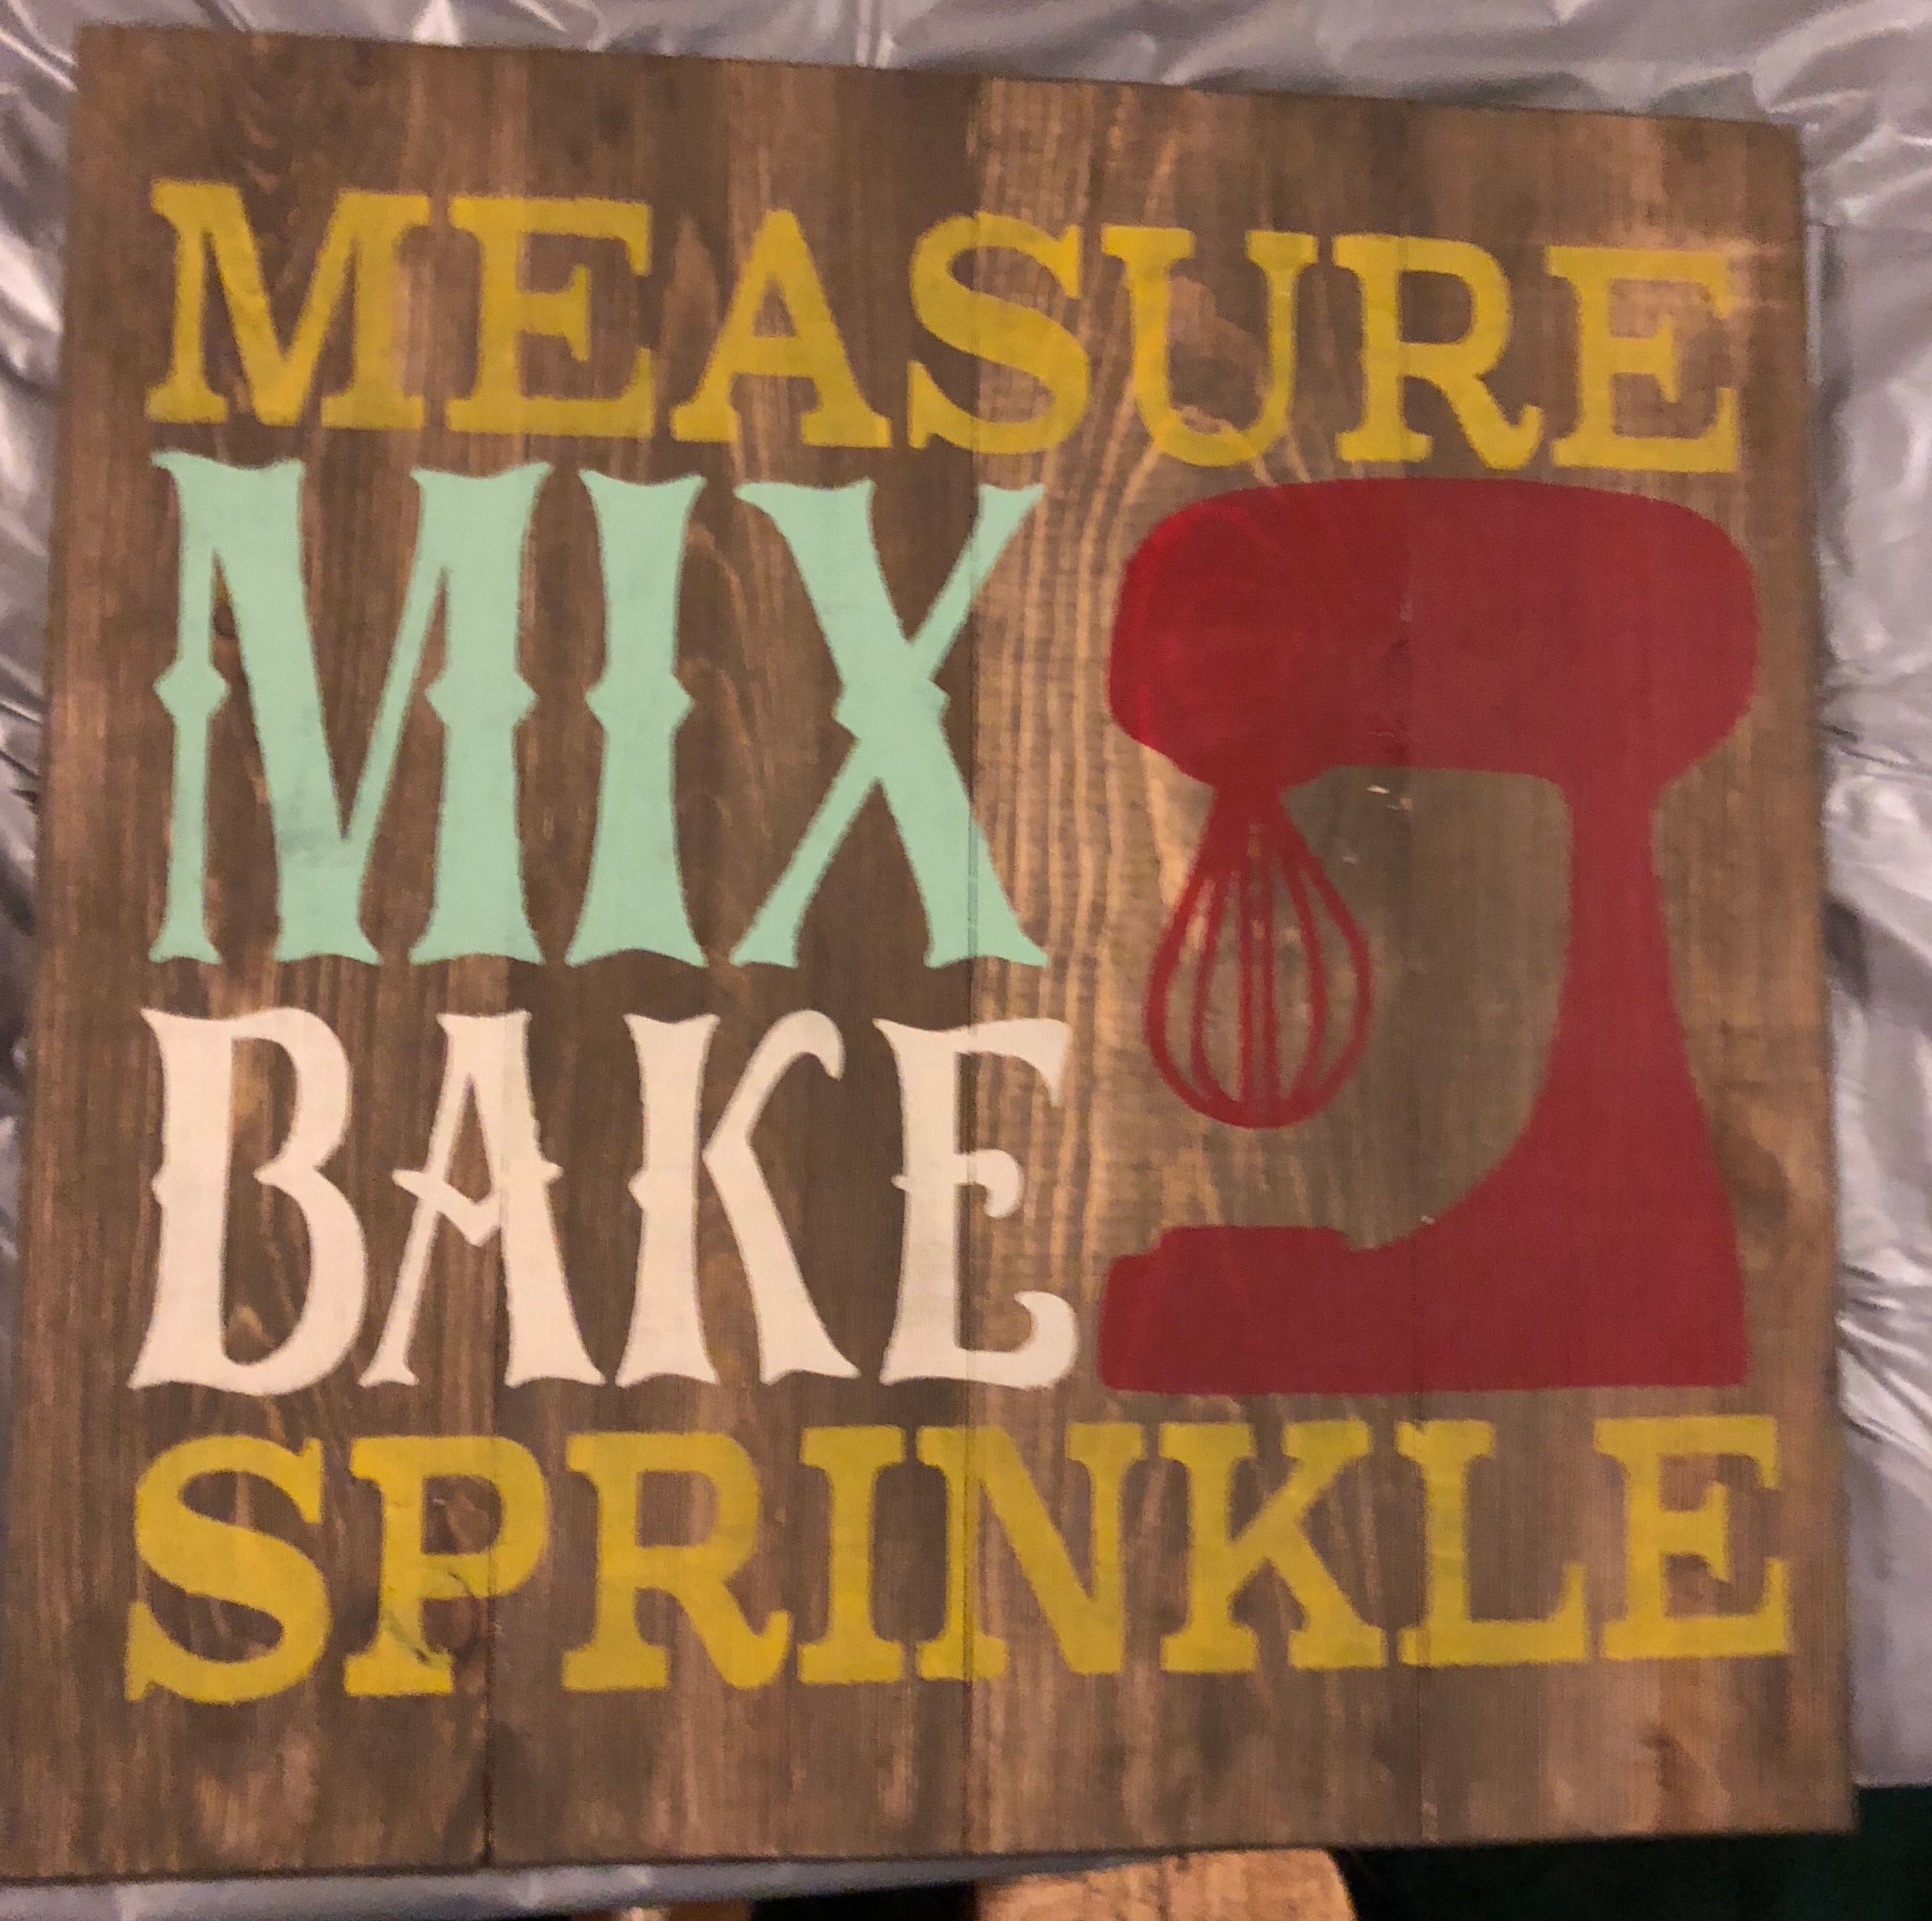 Measure Mix Bake Sprinkle